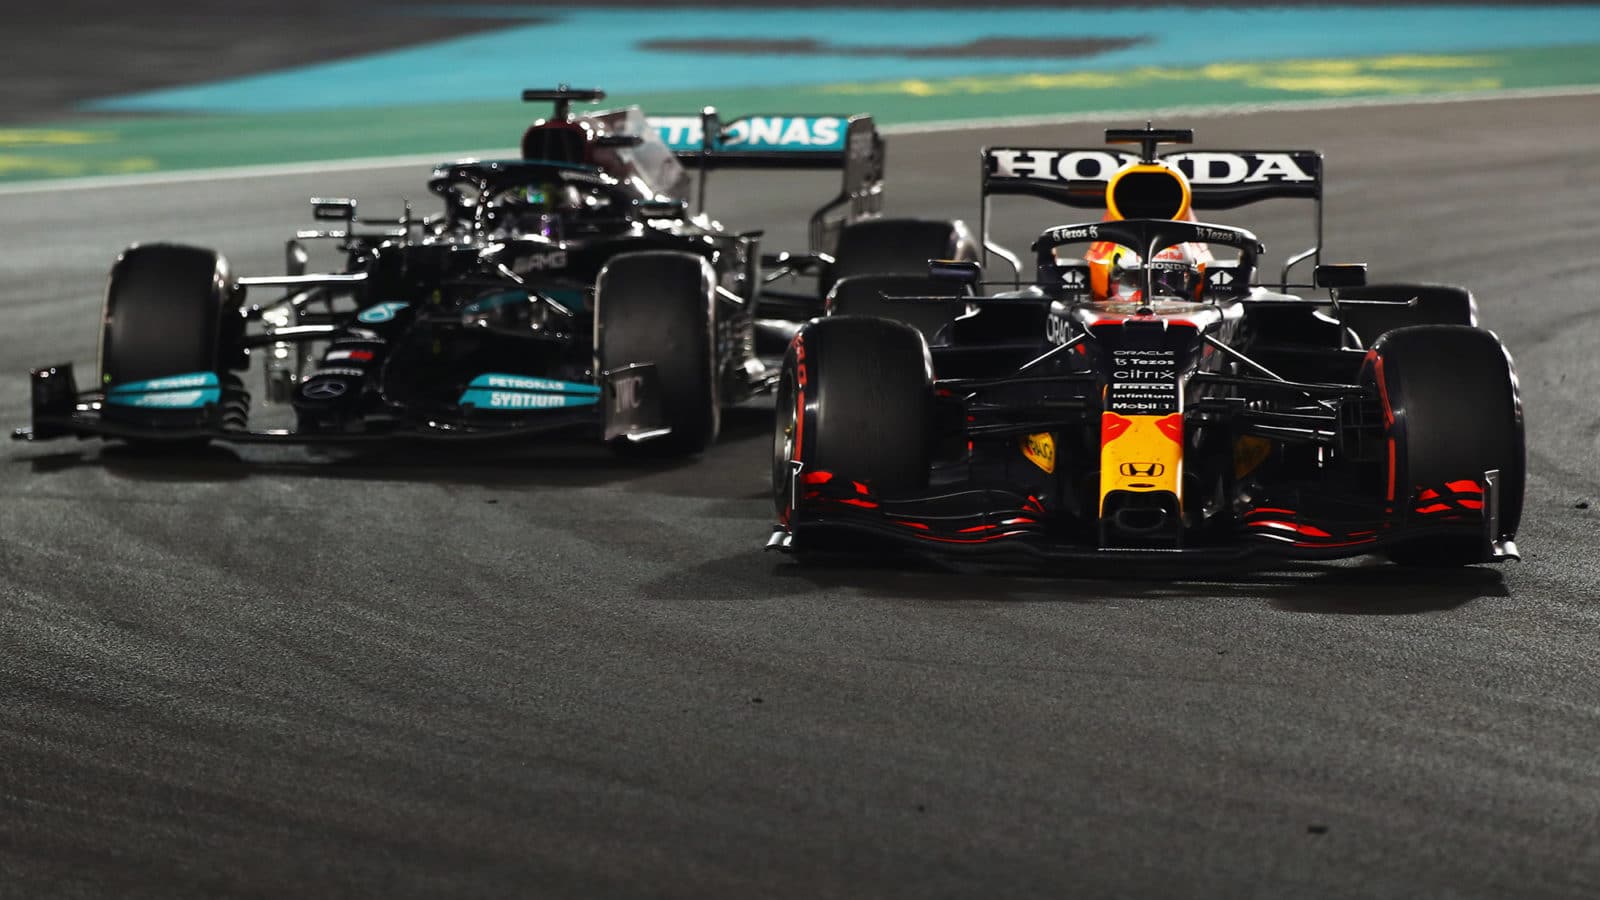 Max Verstappen overtakes Lewis Hamilton in the 2021 Abu Dhabi Grand Prix